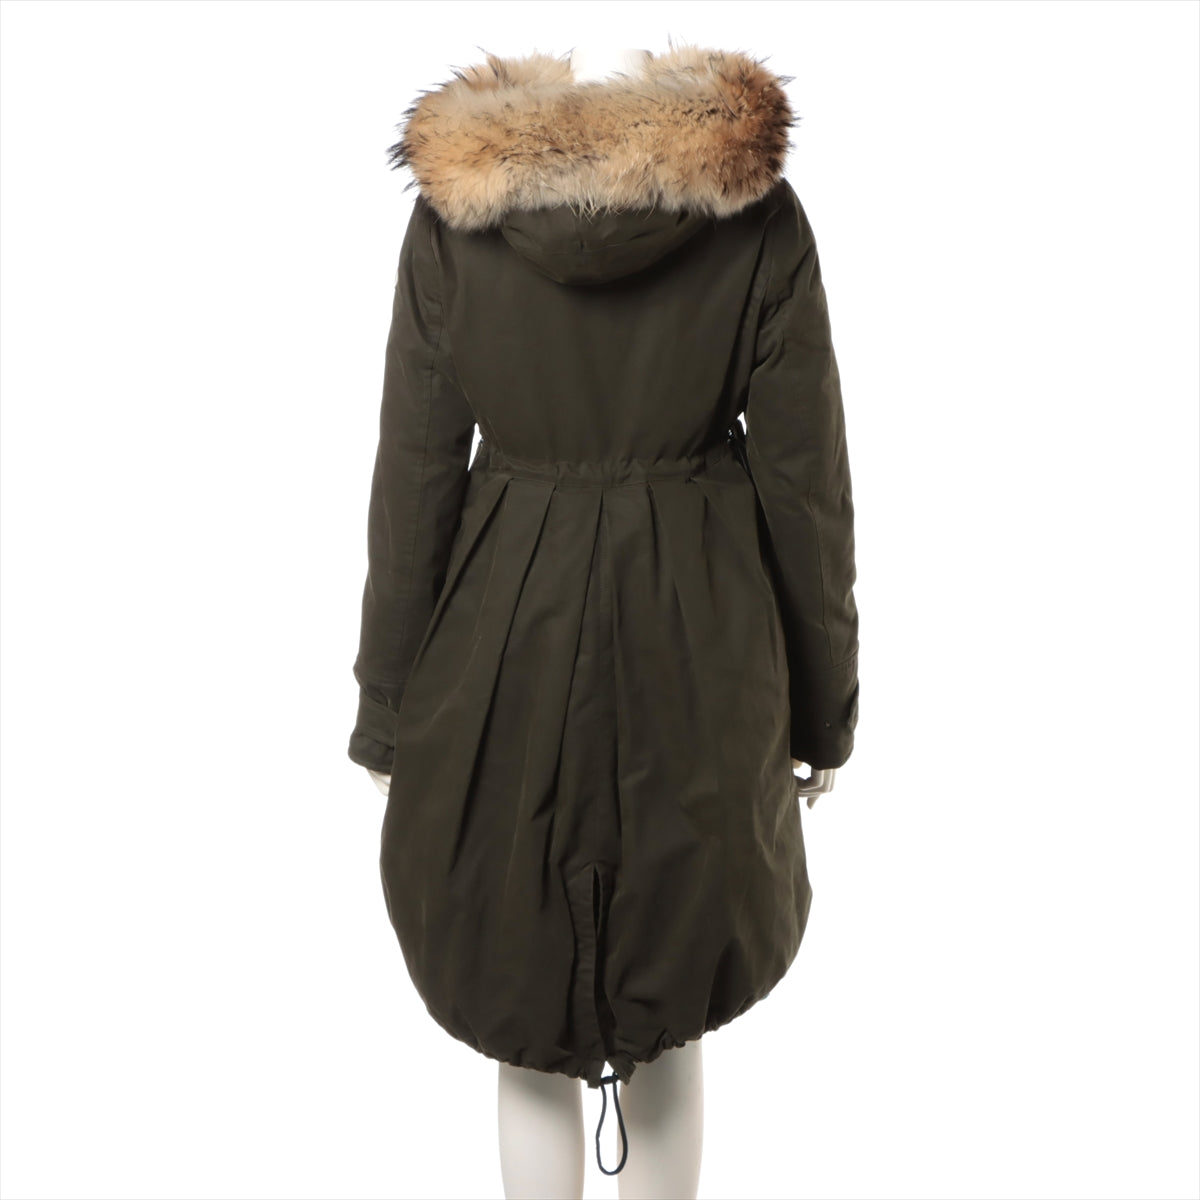 Moncler 16 years Cotton Down coat 1 Ladies' Khaki  EVANTHIA Removable fur